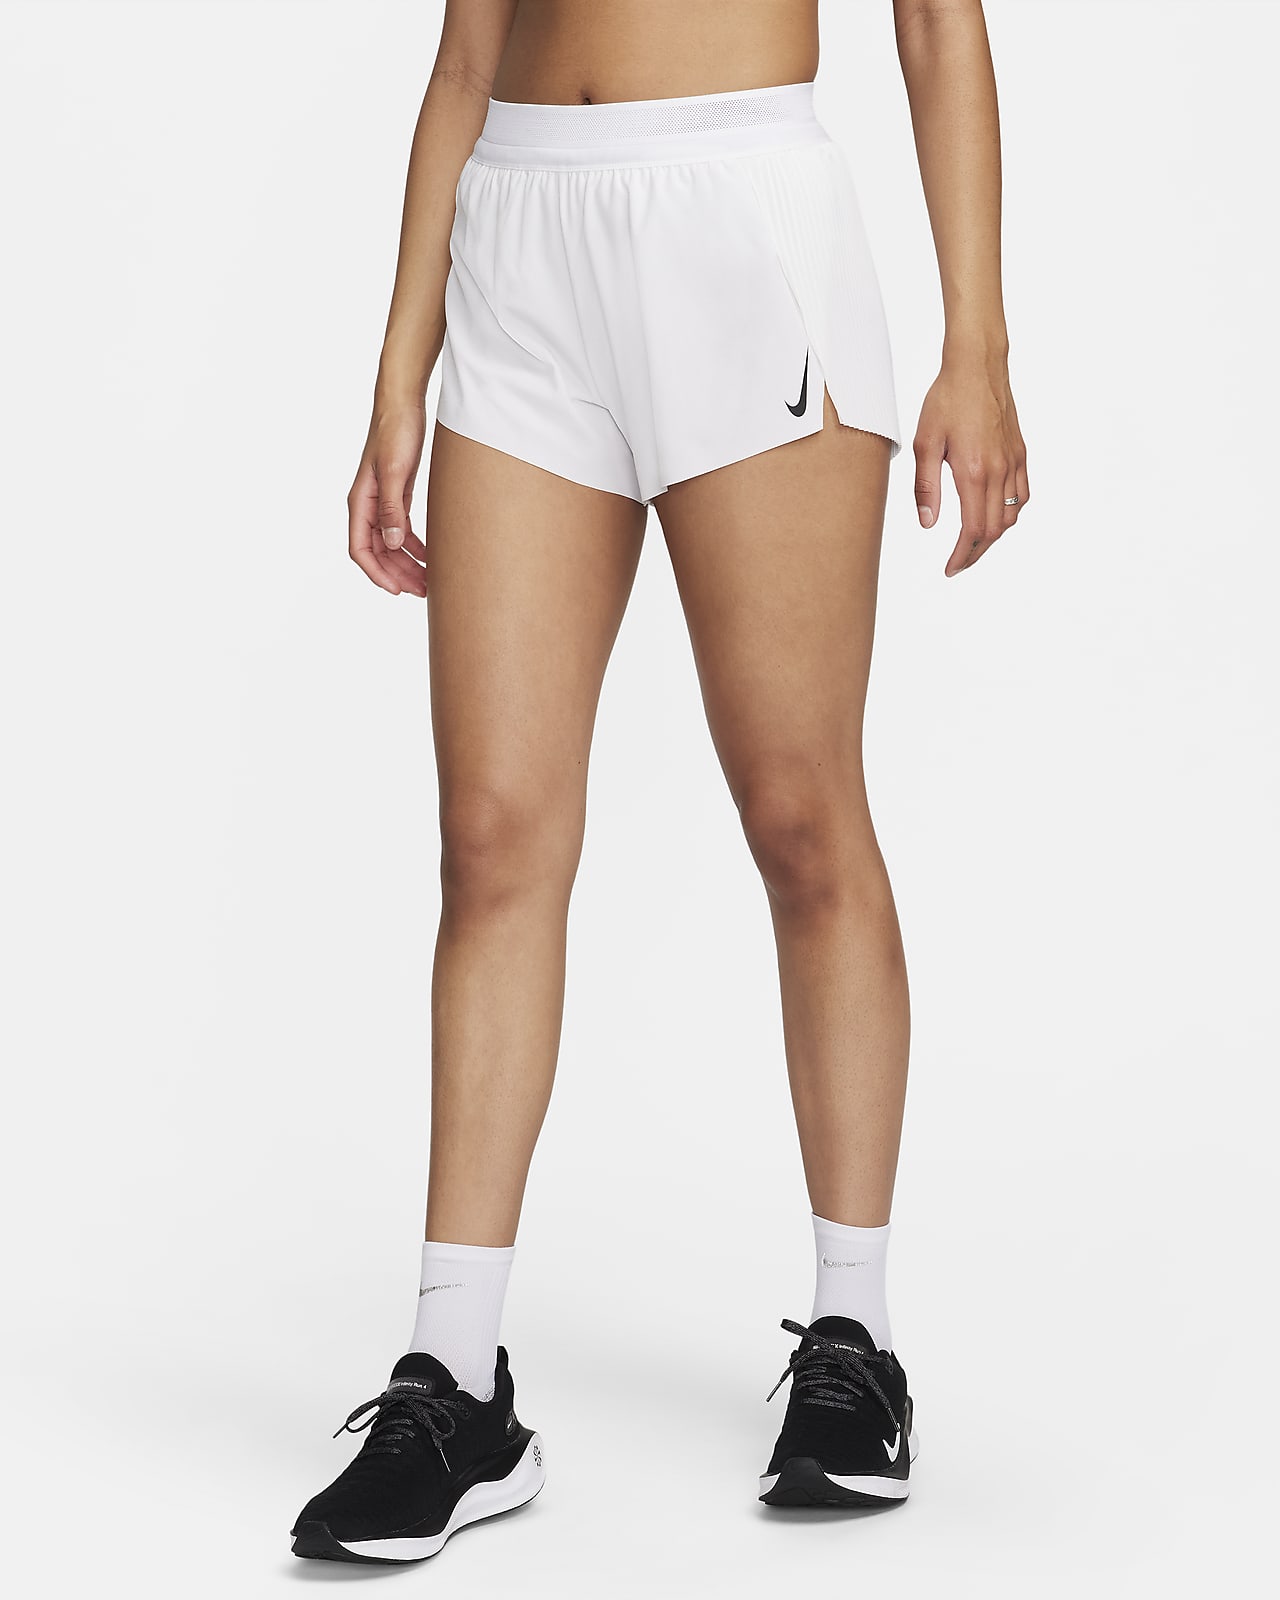 Nike Aeroswift Running Shorts, Women's Fashion, Activewear on